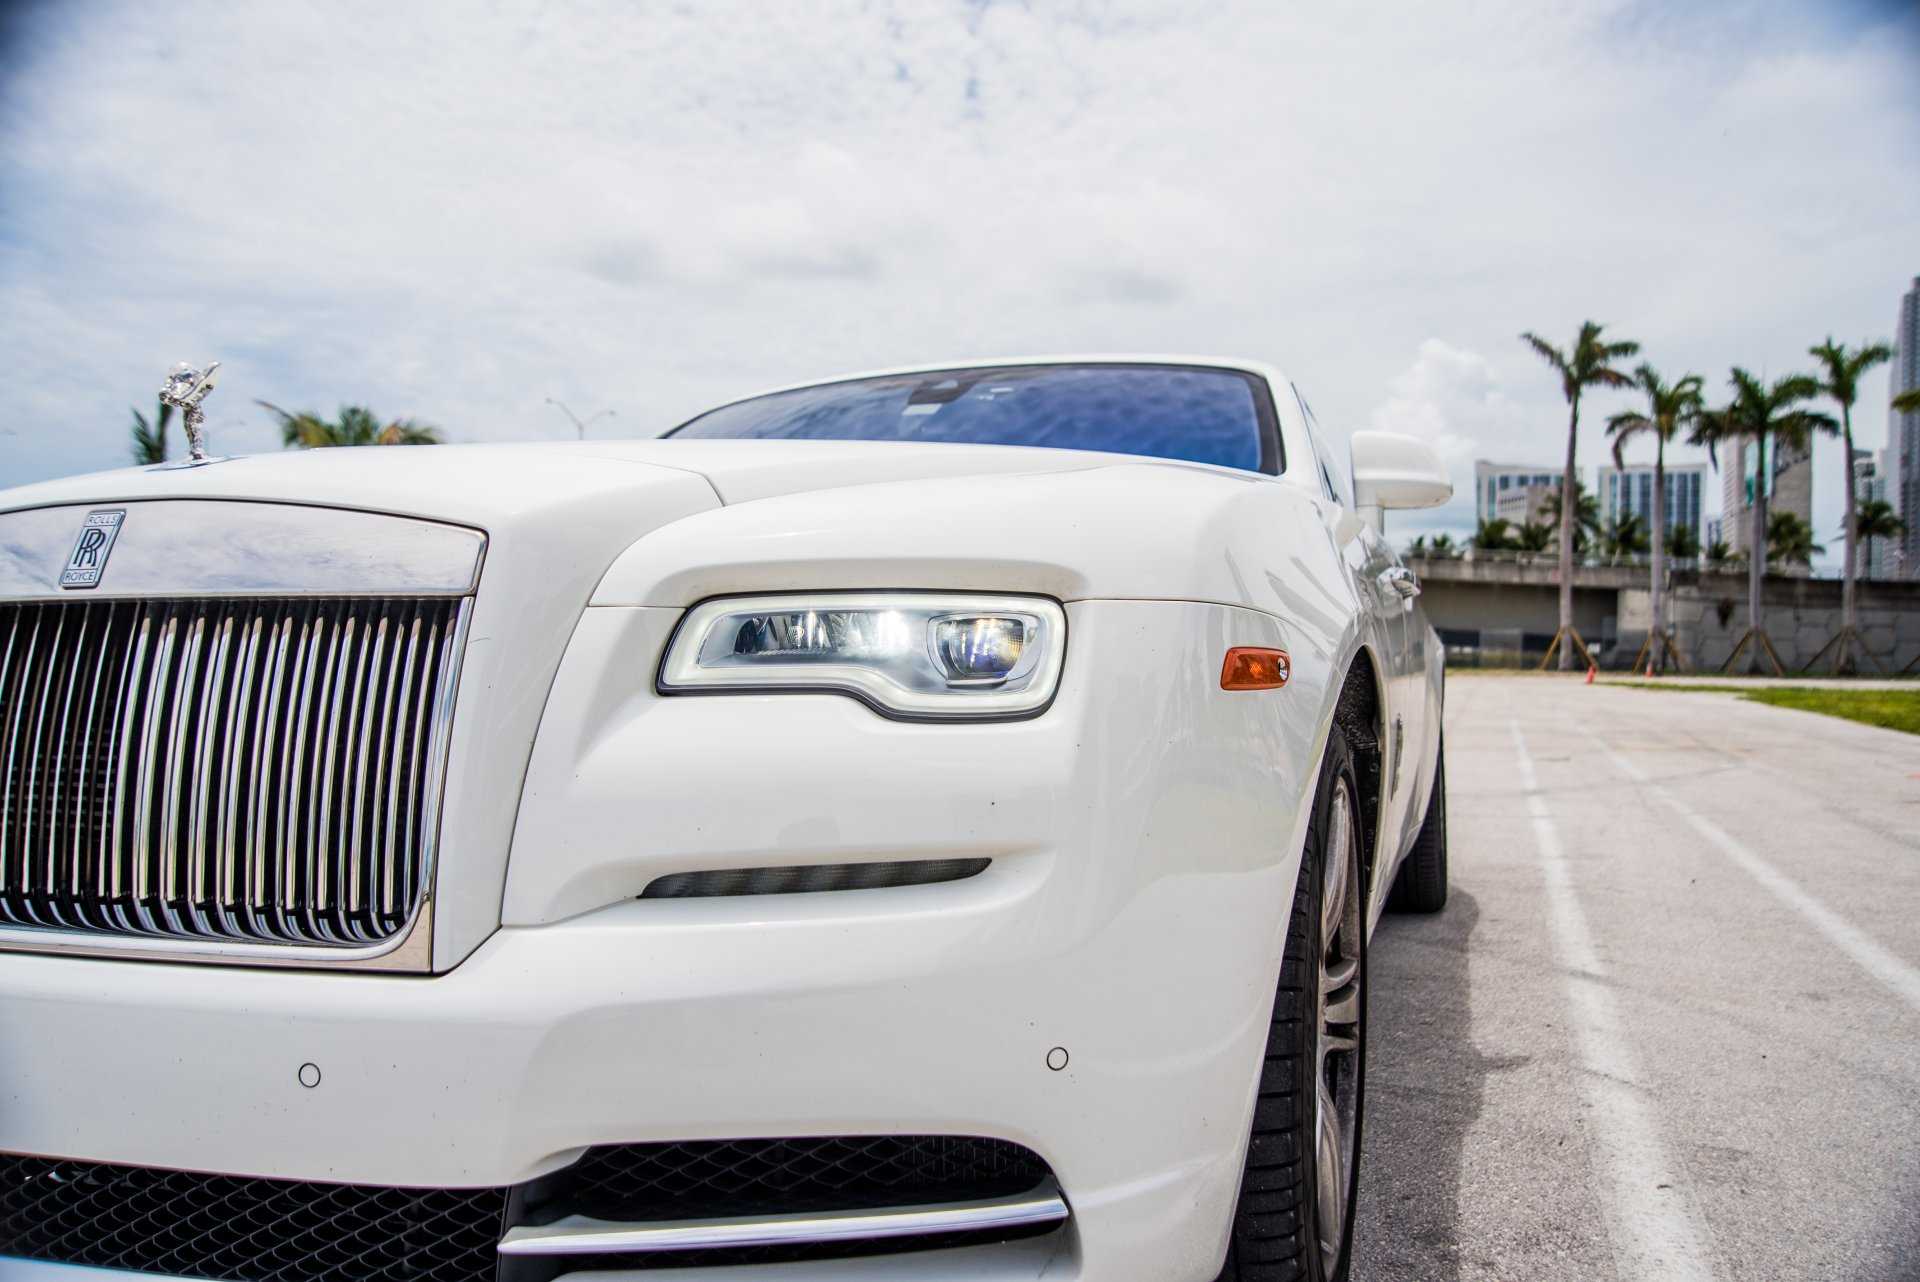 RollsRoyce Rental in Miami Pugachev Luxury Car Rental